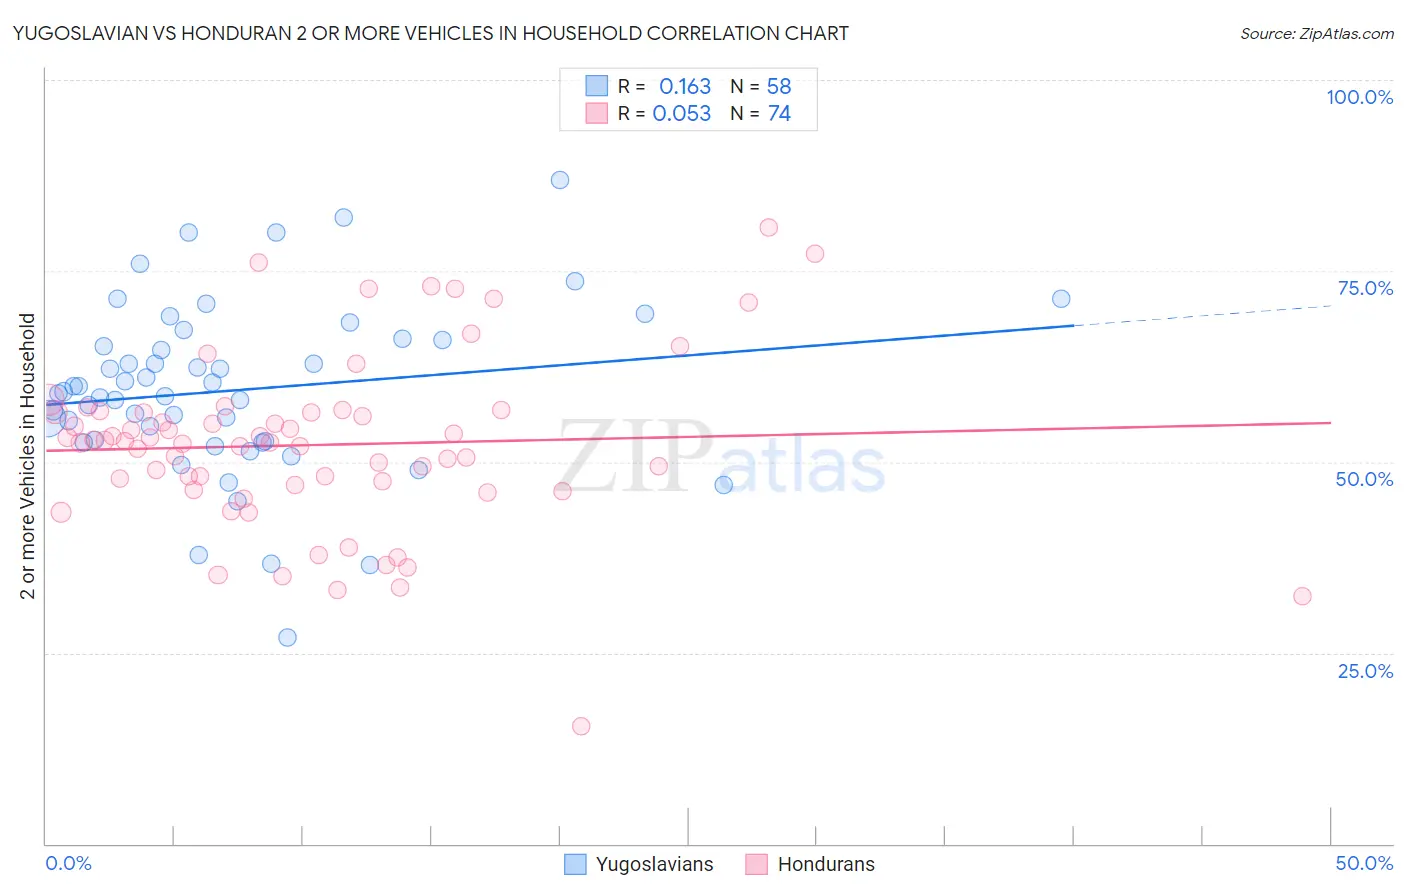 Yugoslavian vs Honduran 2 or more Vehicles in Household